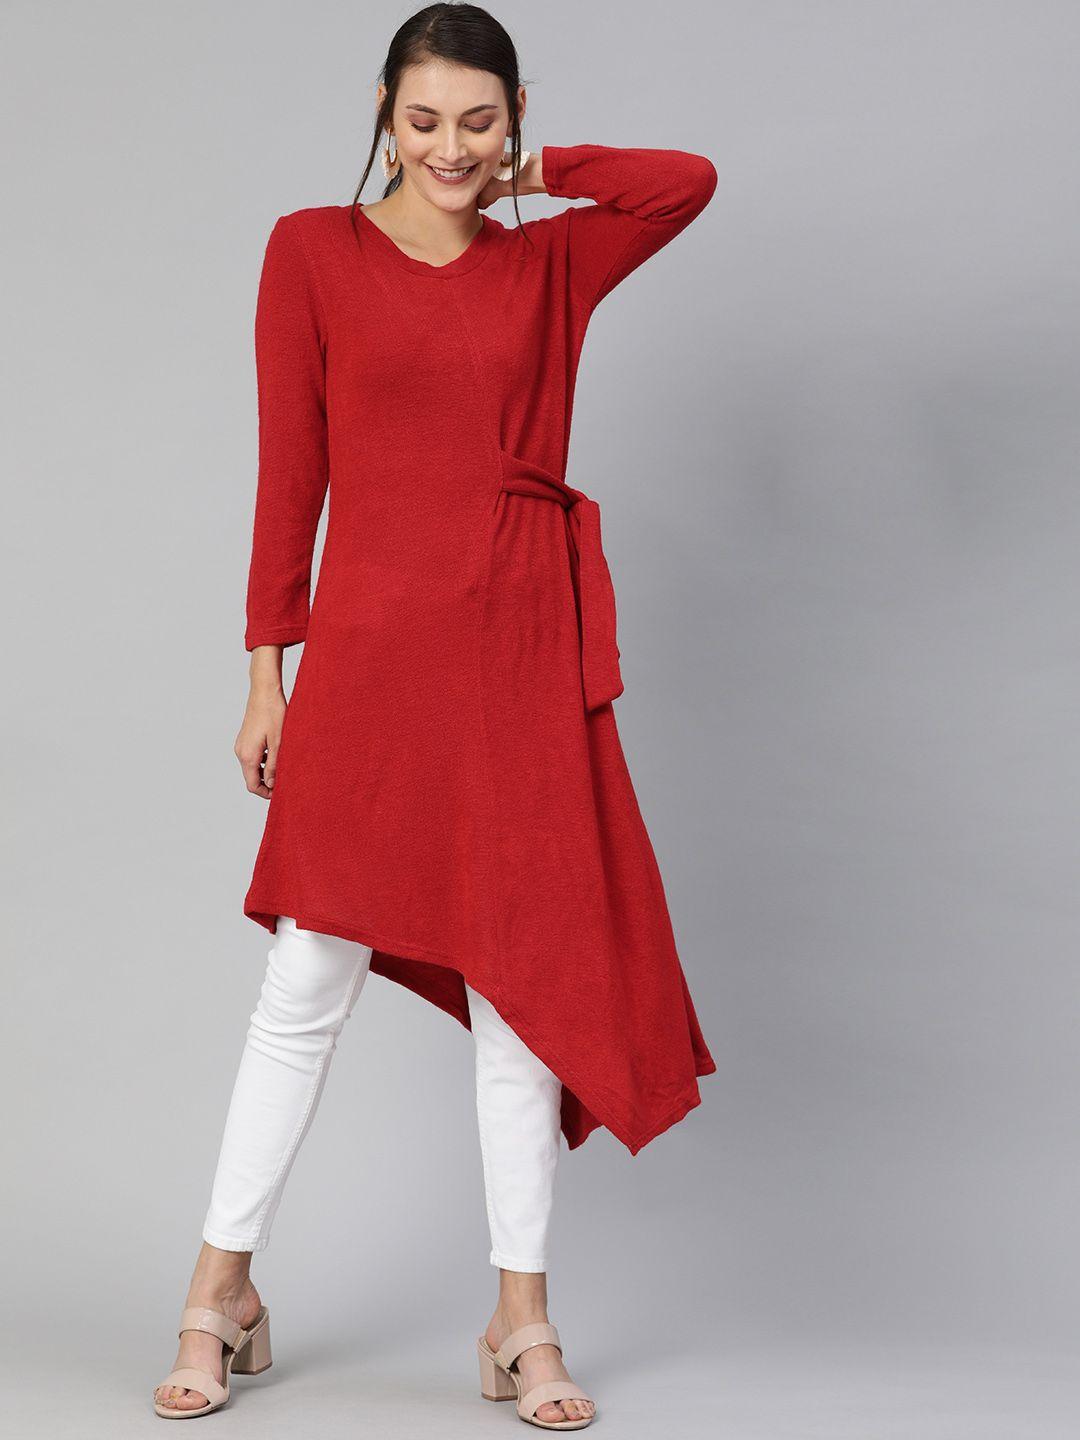 global-desi-women-red-acrylic-tunic